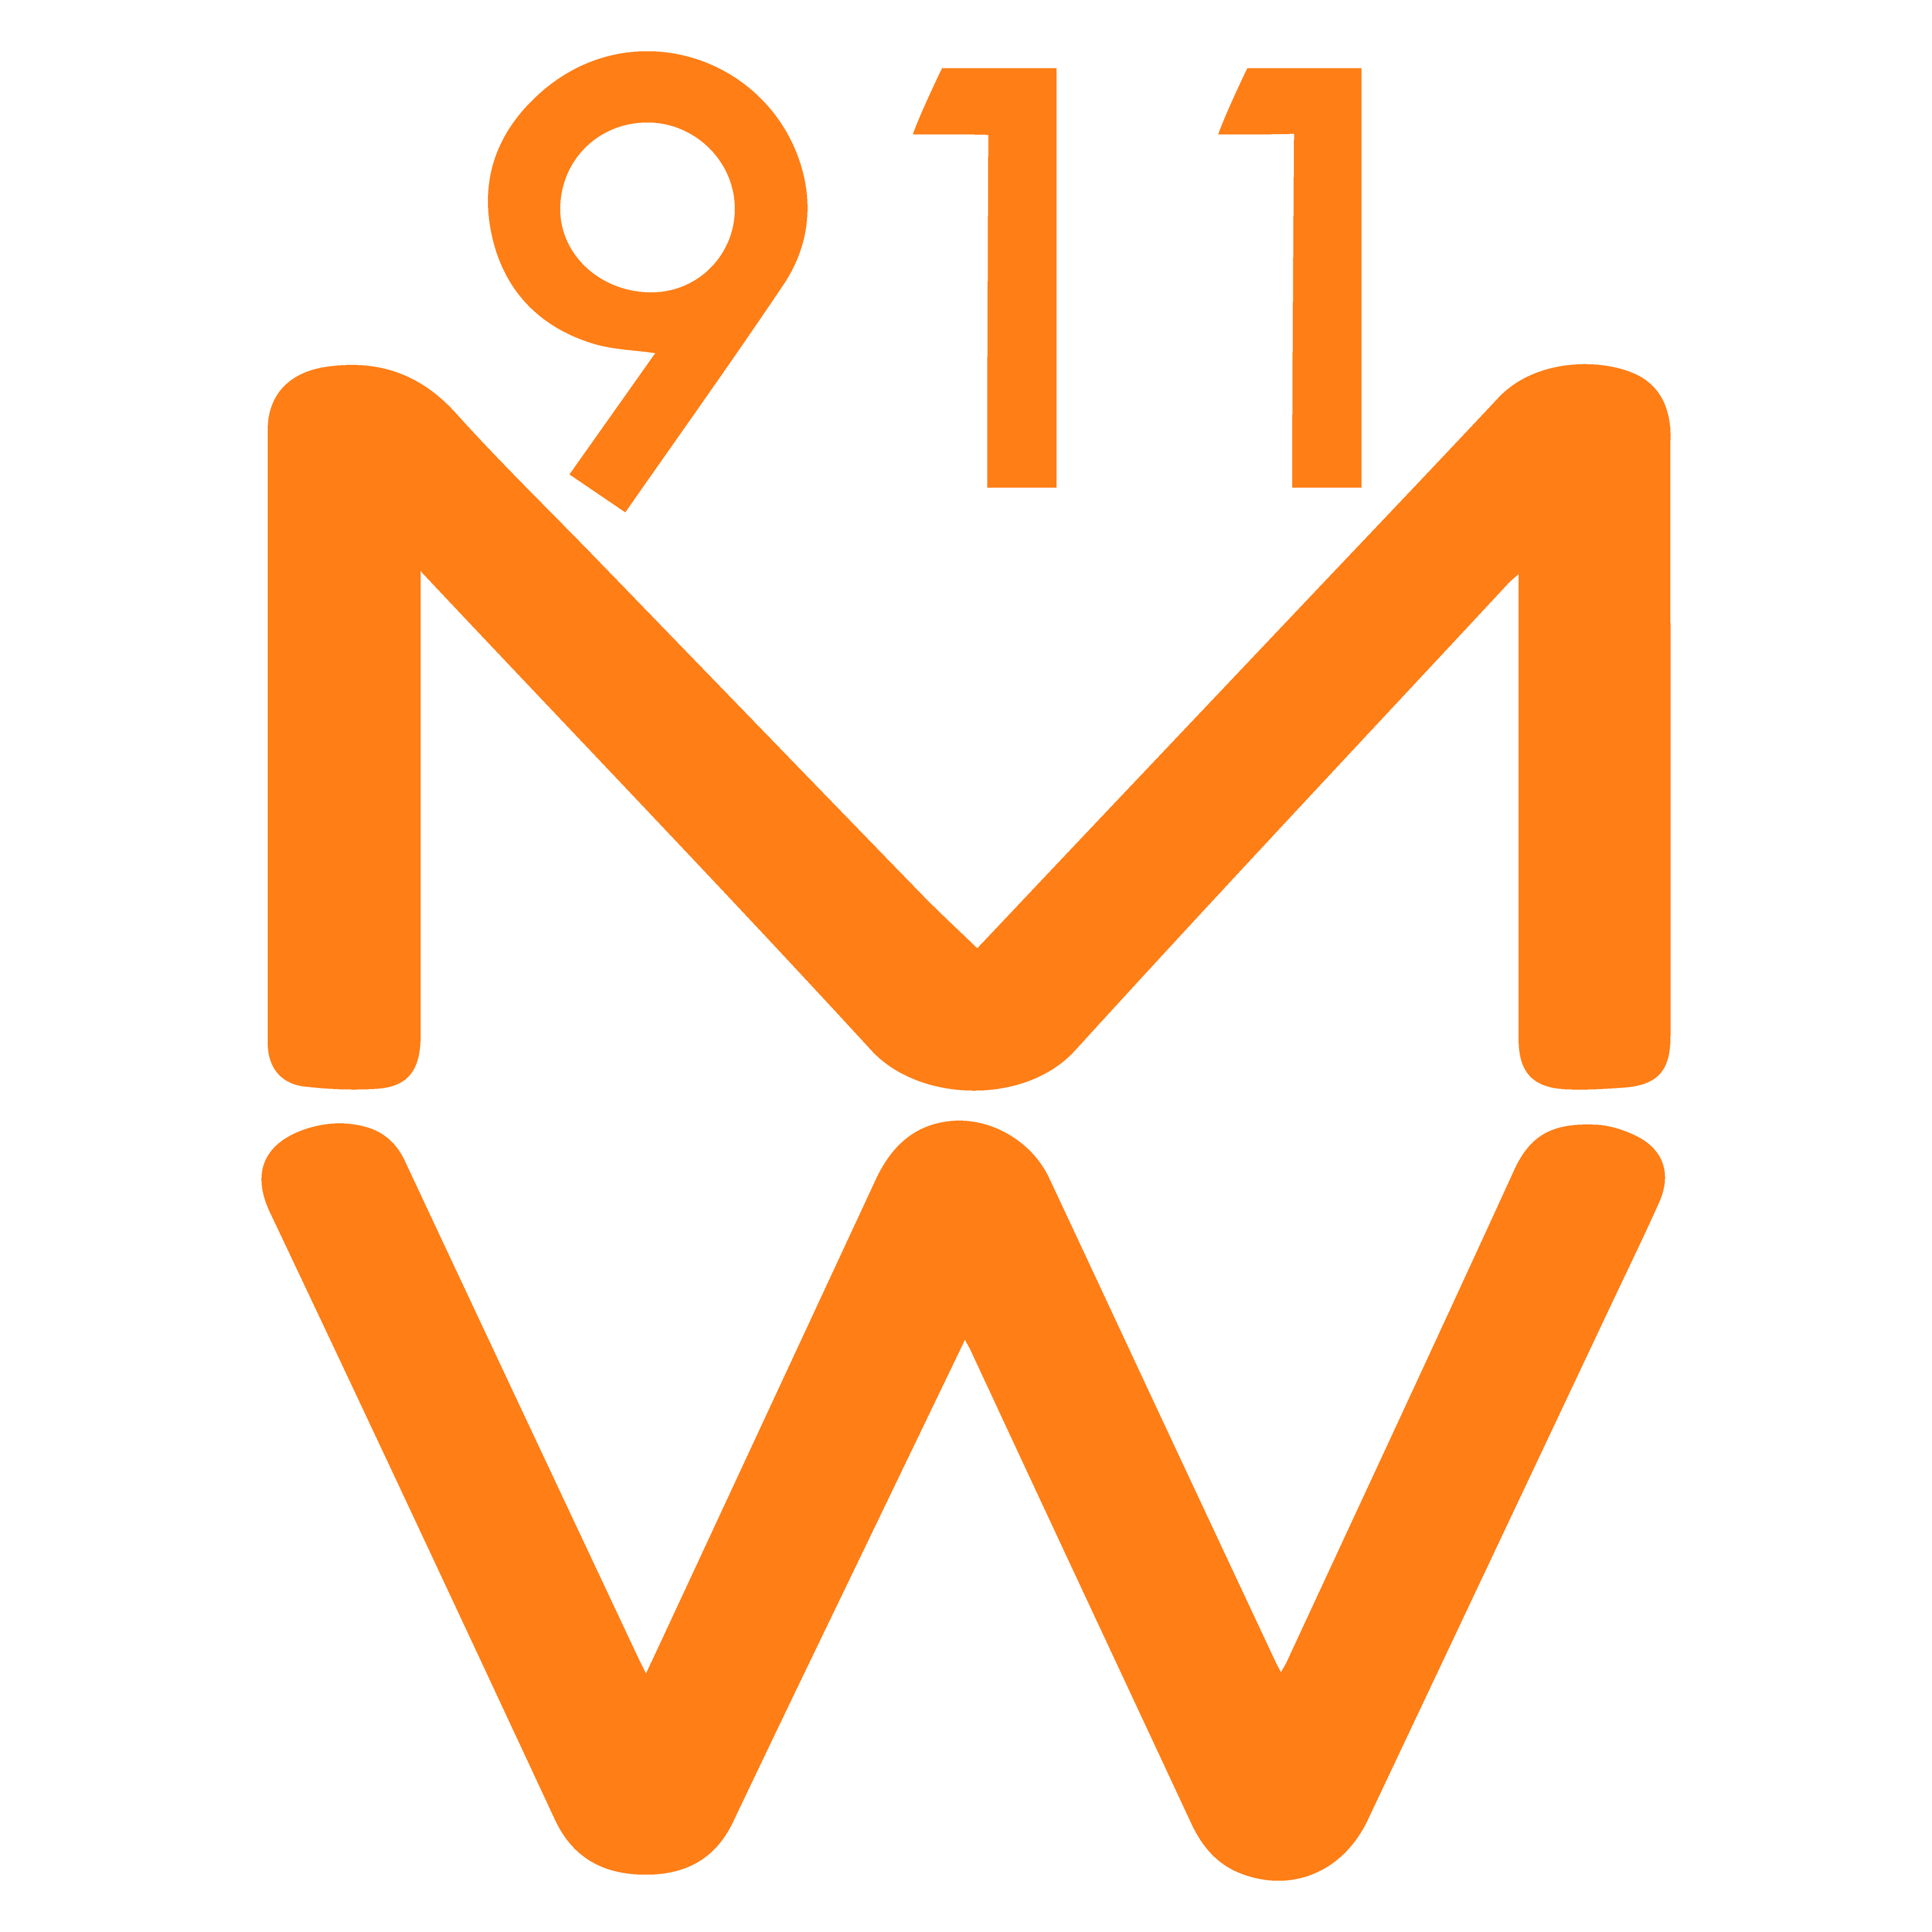 911MYWEB Logo